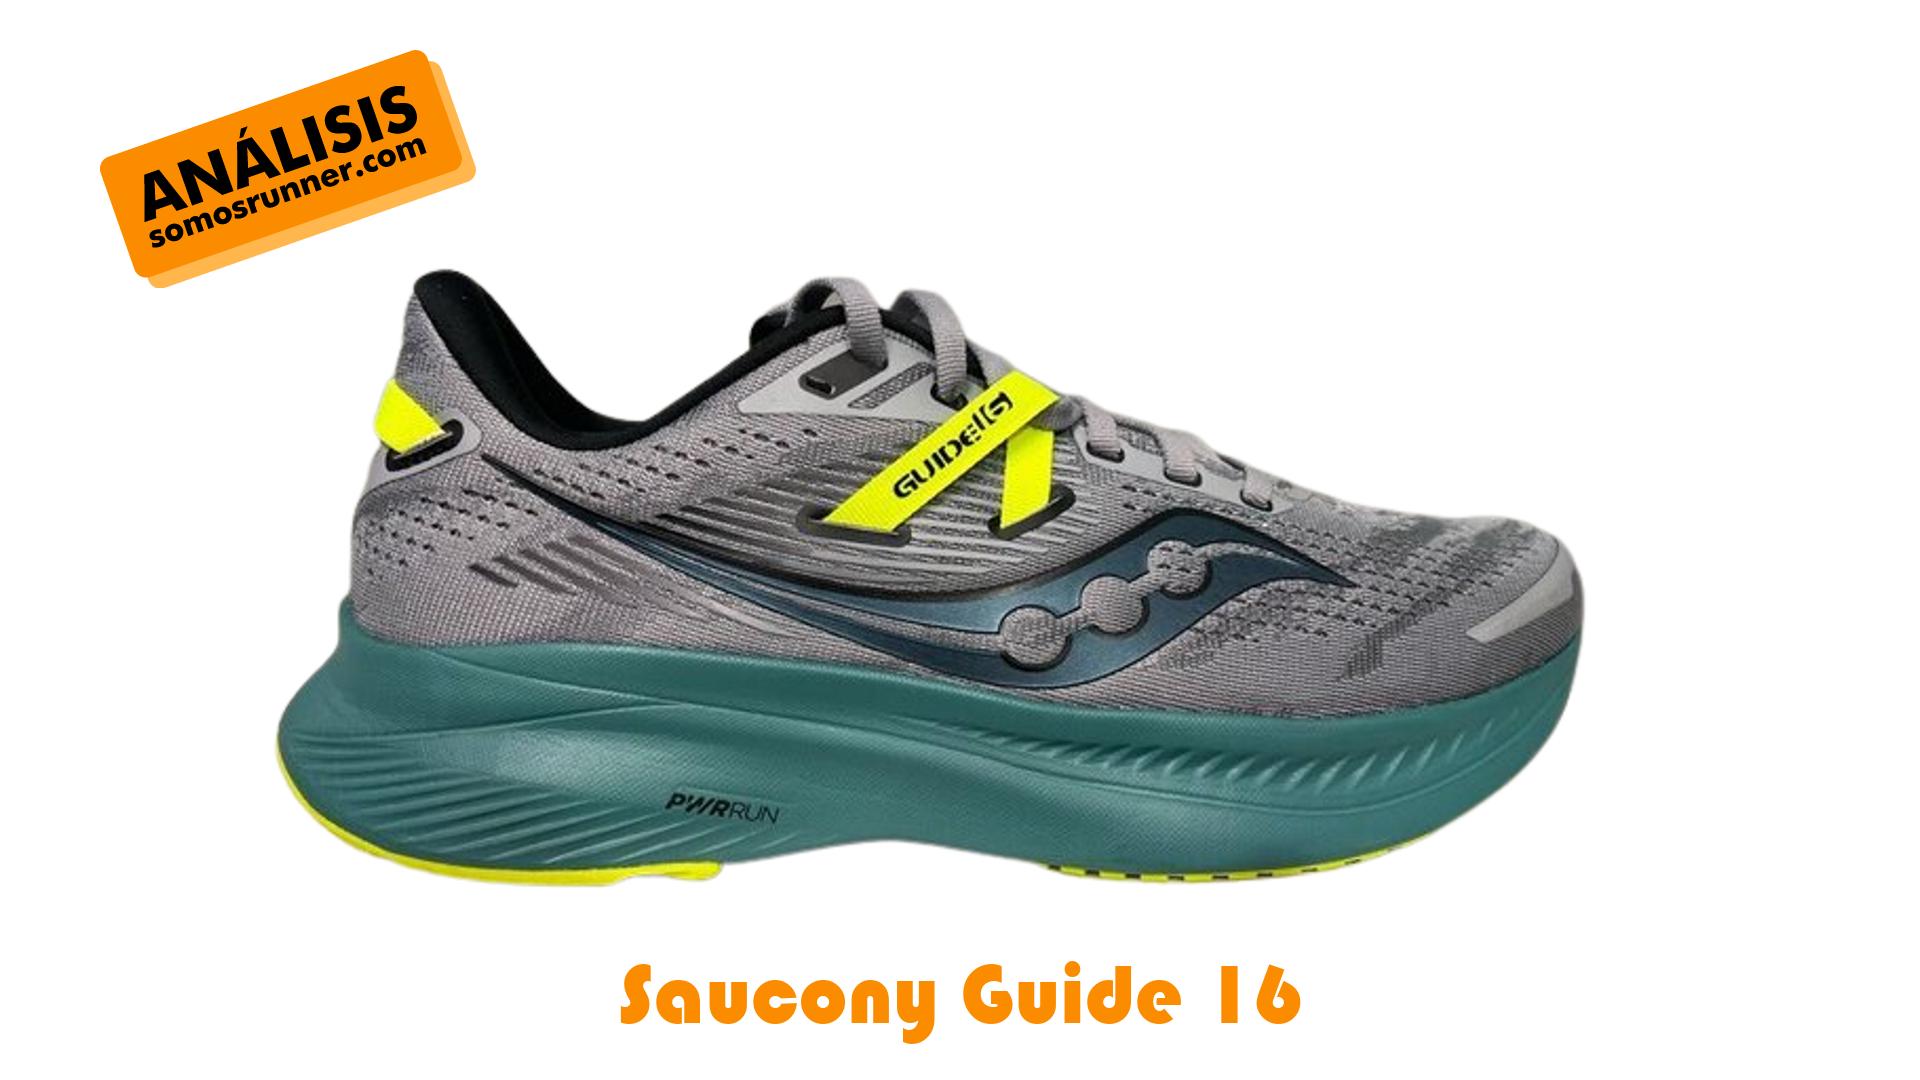 Saucony Guide 16